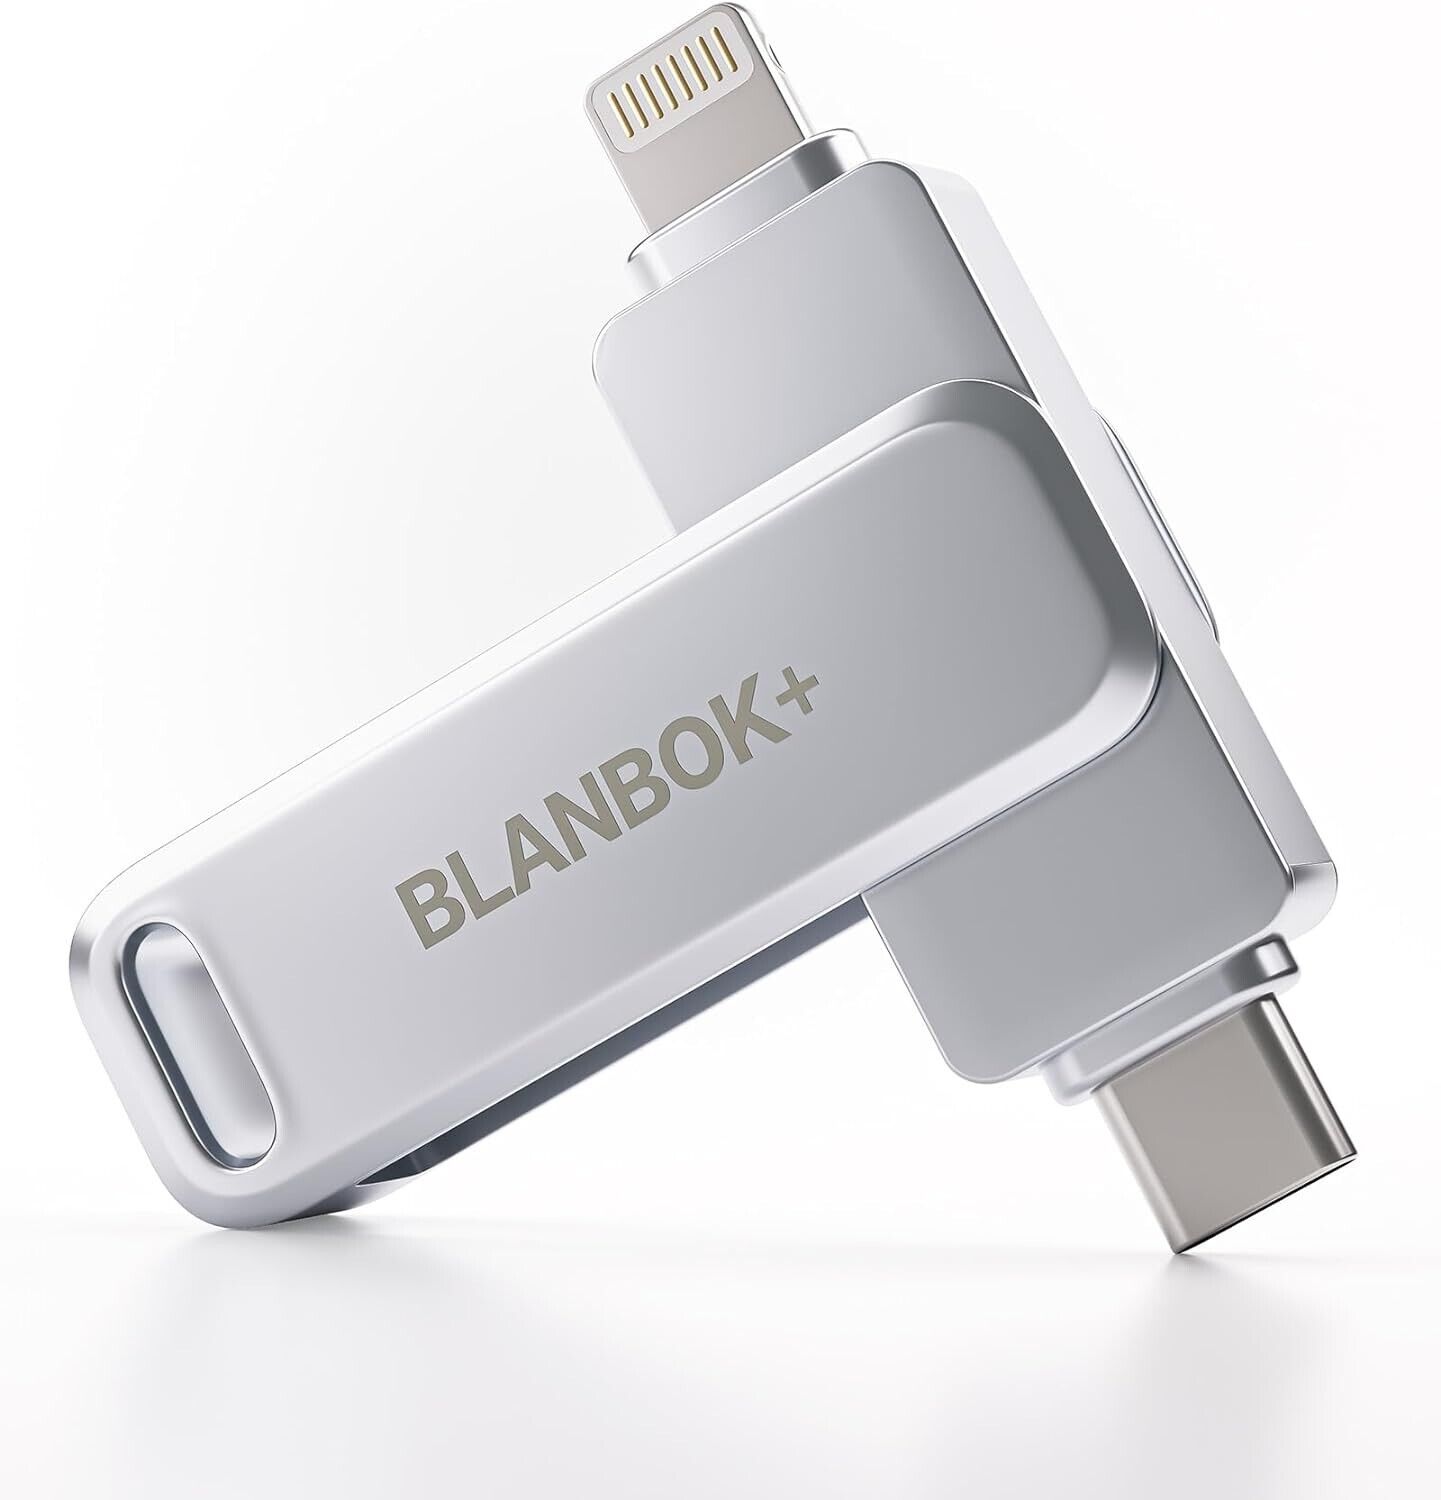 Blanbok+ MFi Certified 128GB Flash Drive for iPhone Photo Stick, USB Thumb Drive